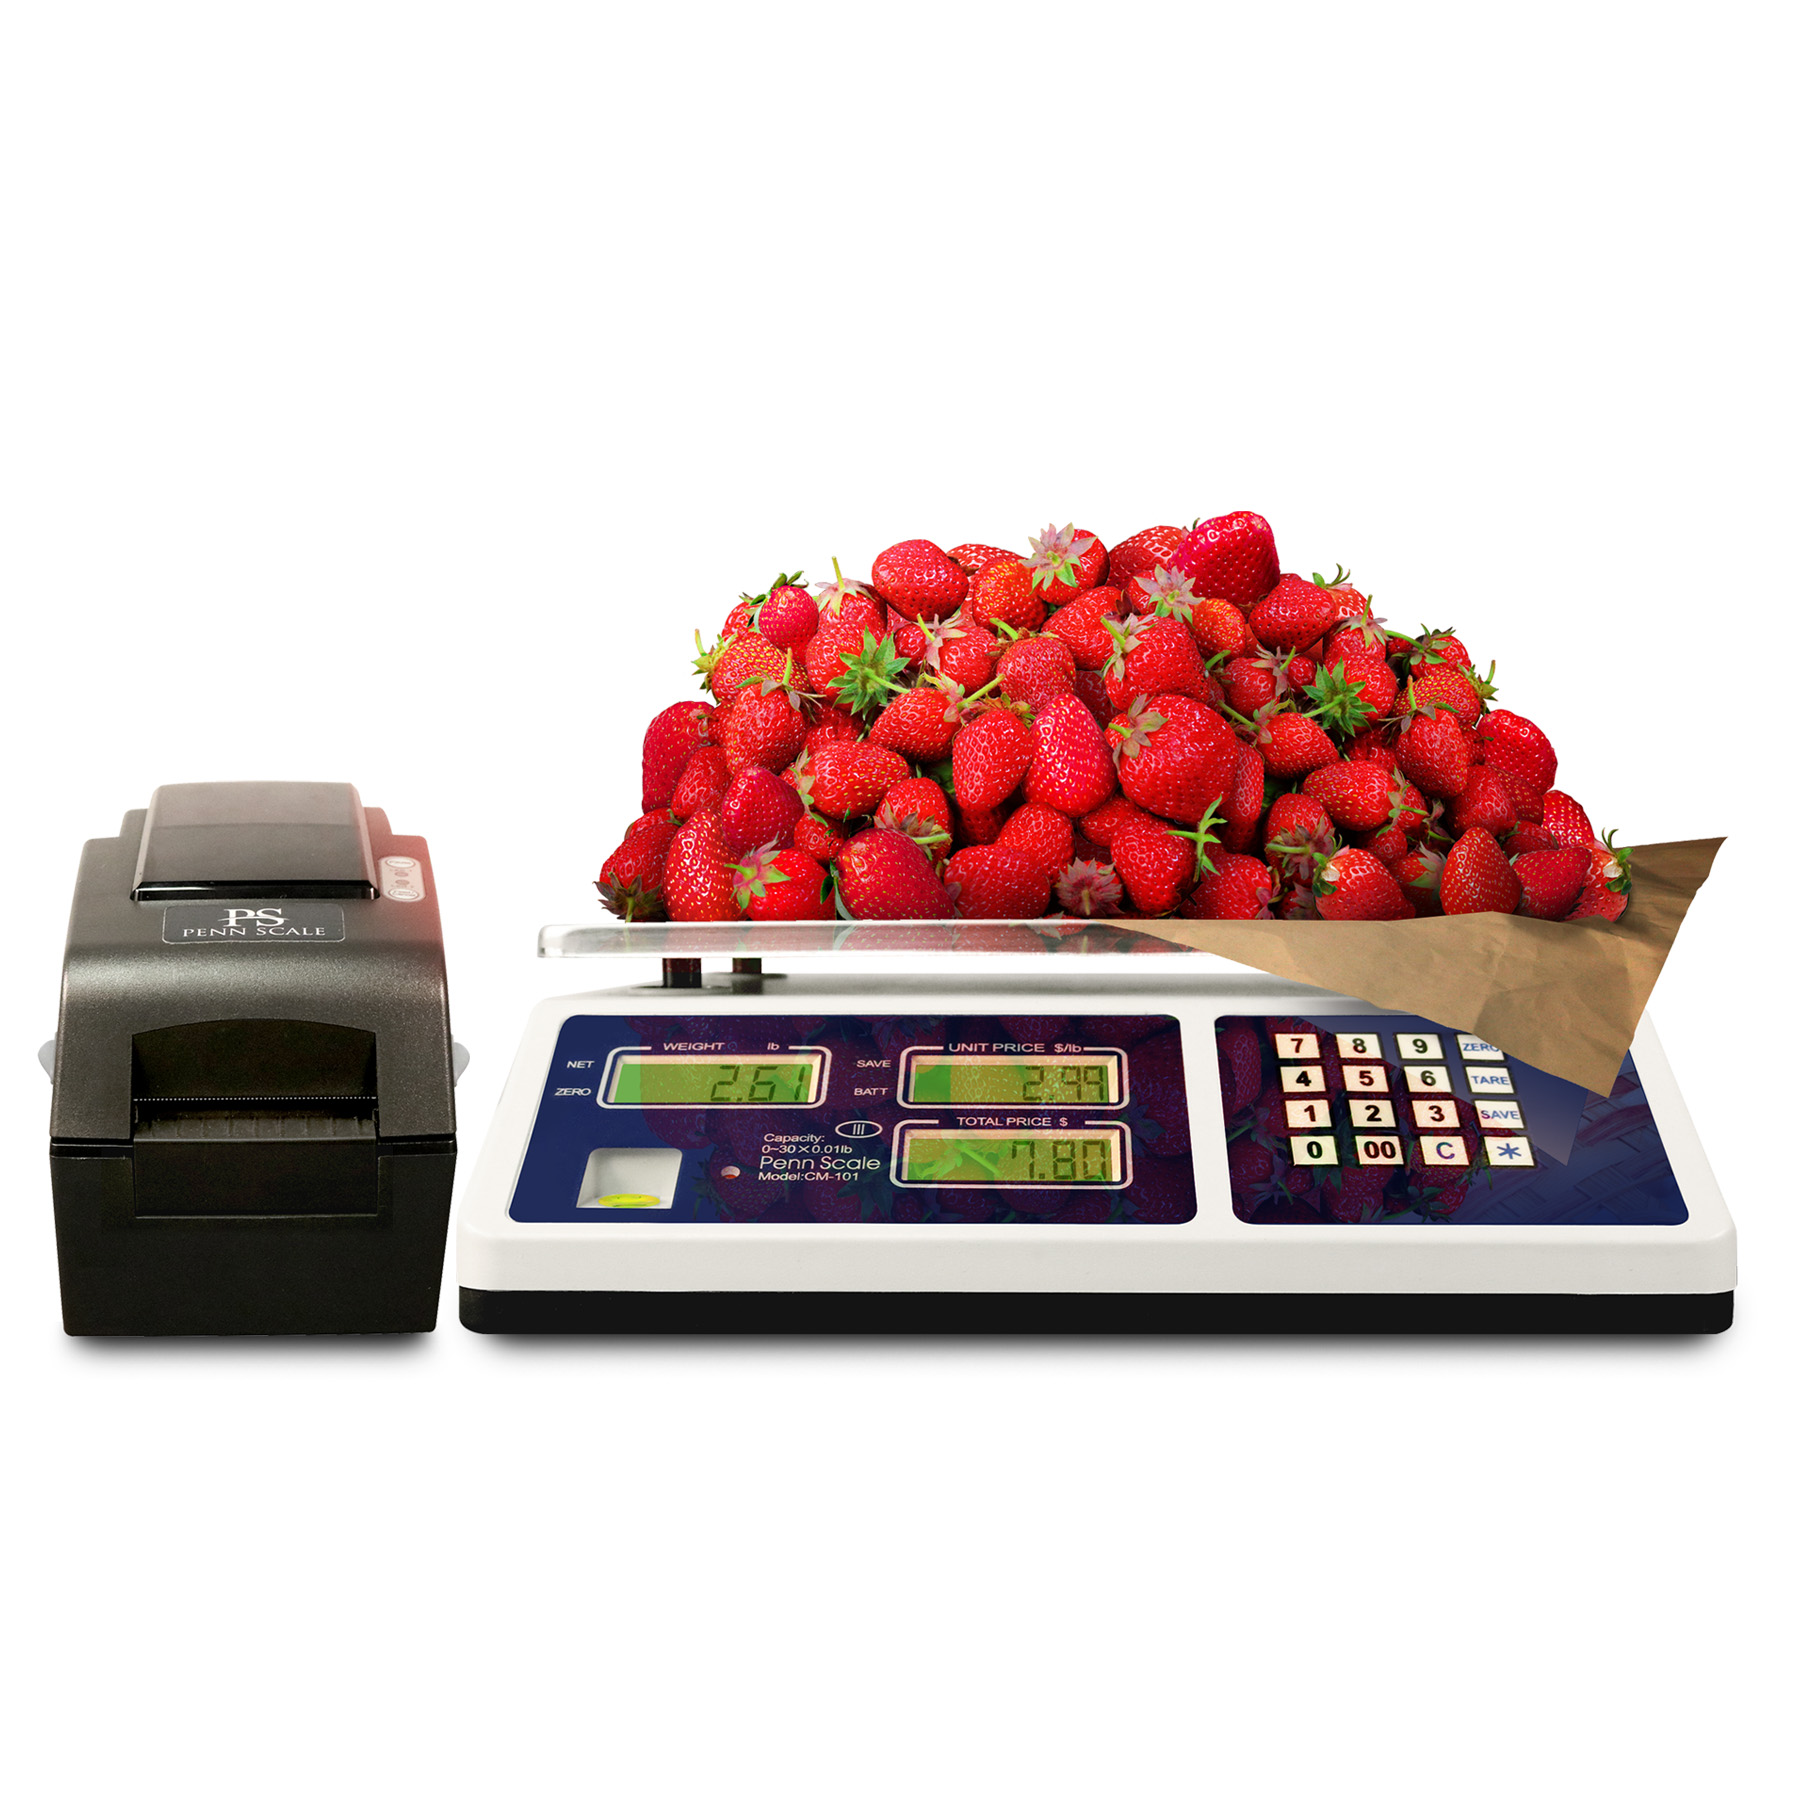 Digital Food Scales - Shop Now